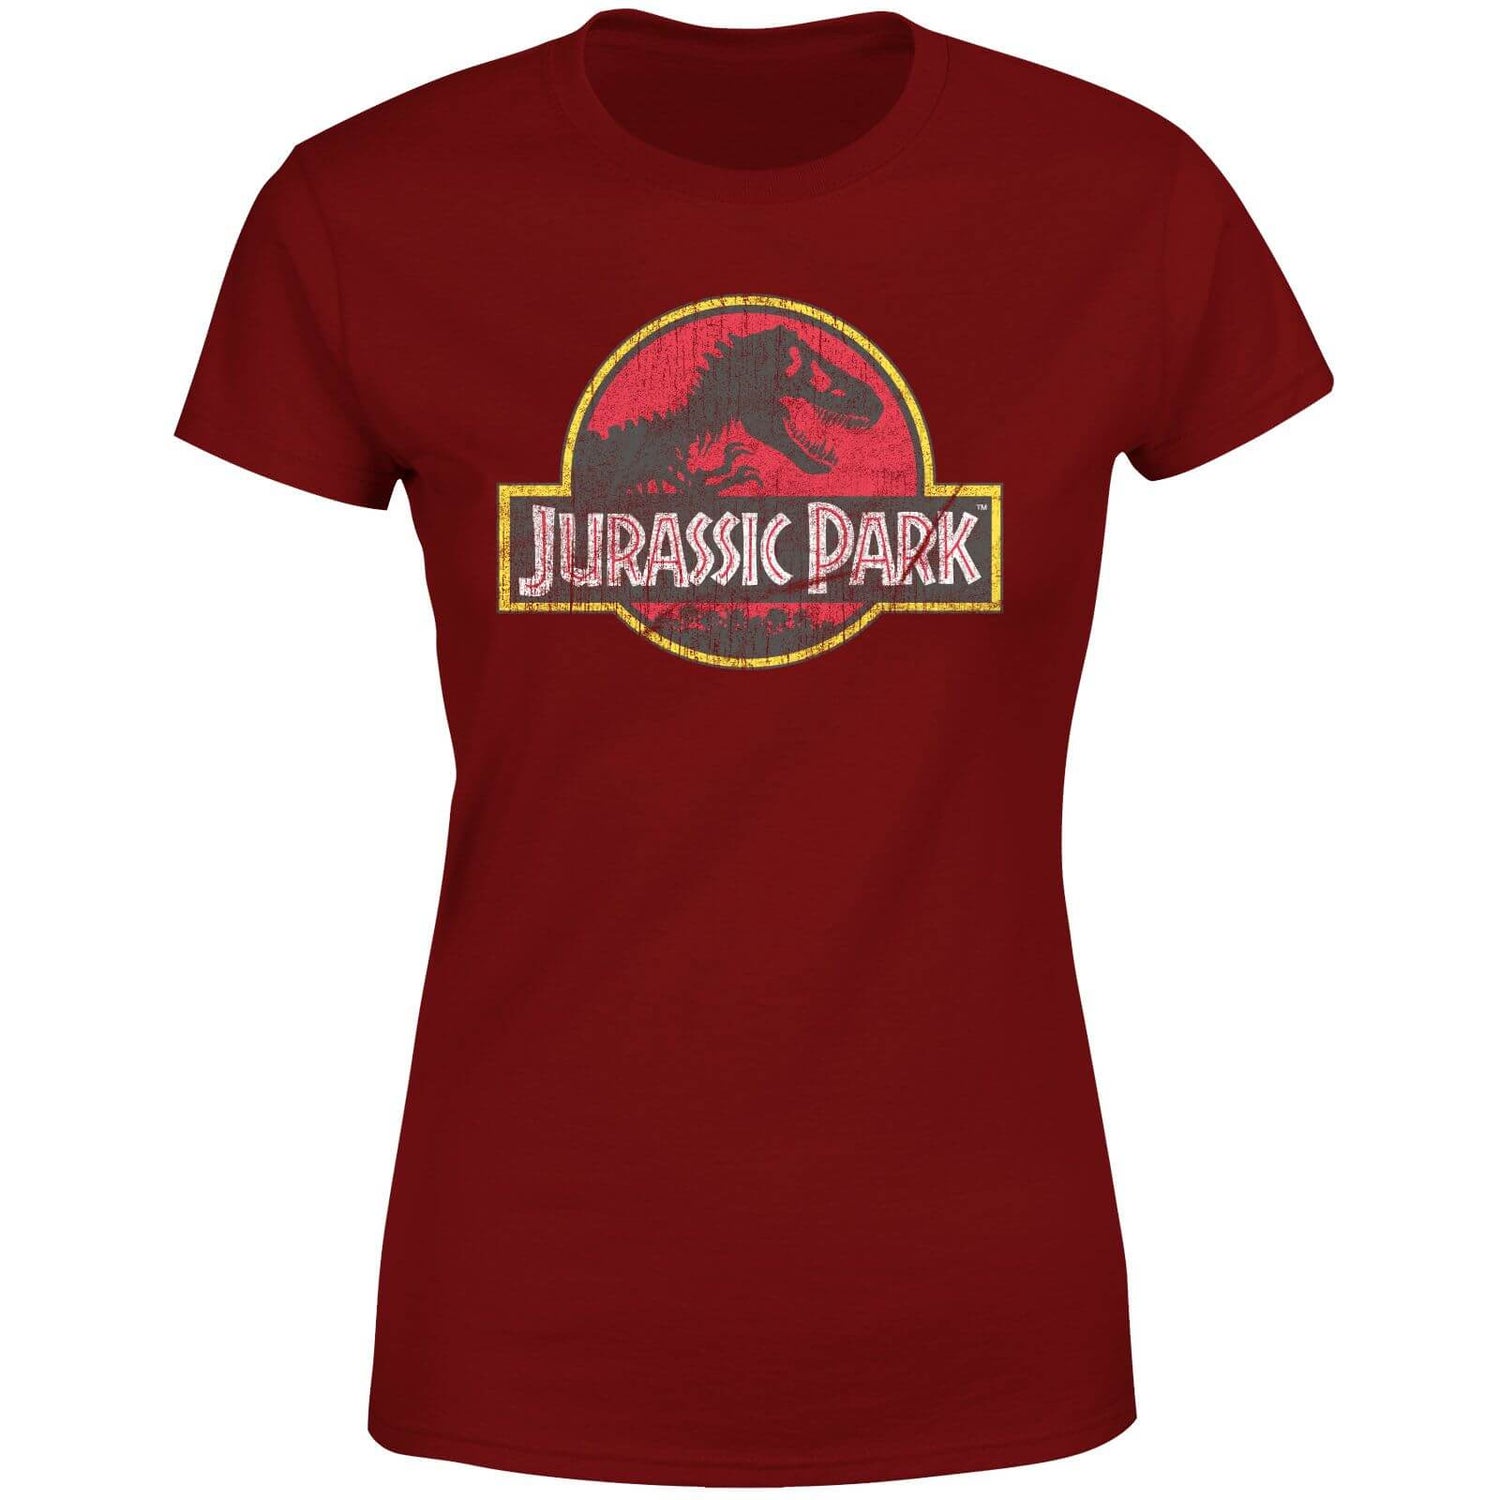 Jurassic Park Logo Vintage Women's T-Shirt - Burgundy